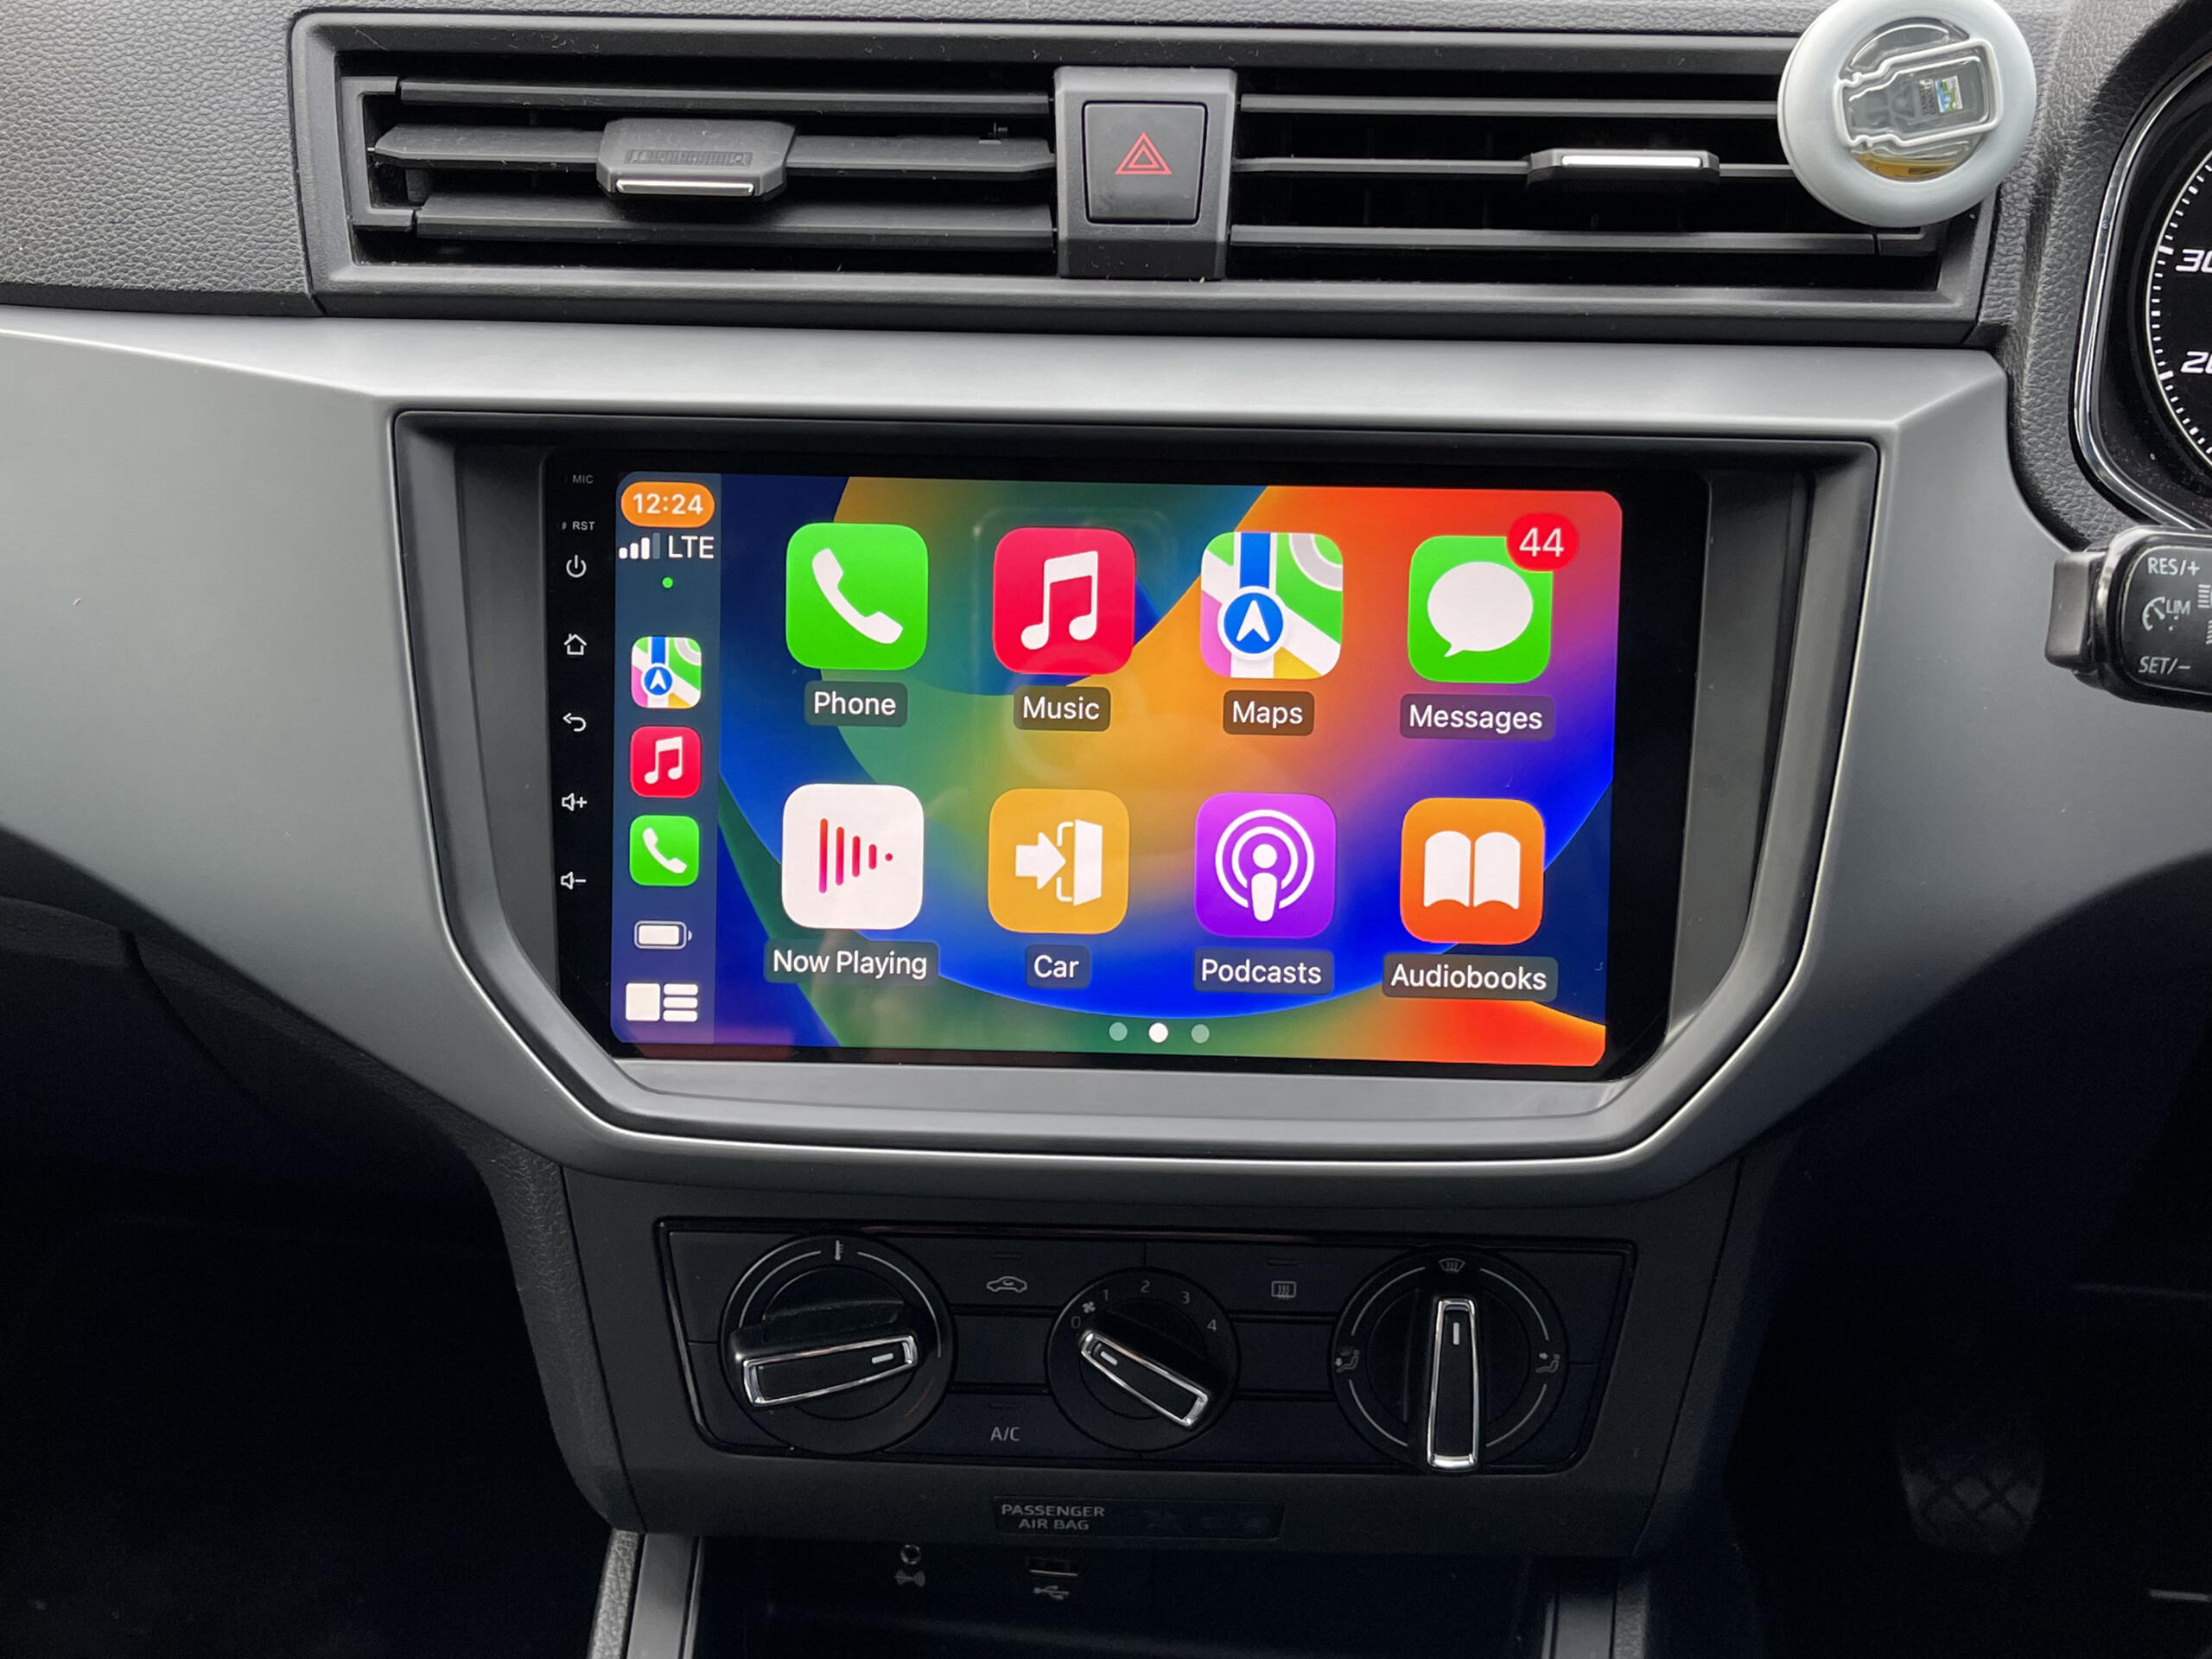 Seat Ibiza scaled - Radio King Ireland - Android Car Radios and CarPlay Systems